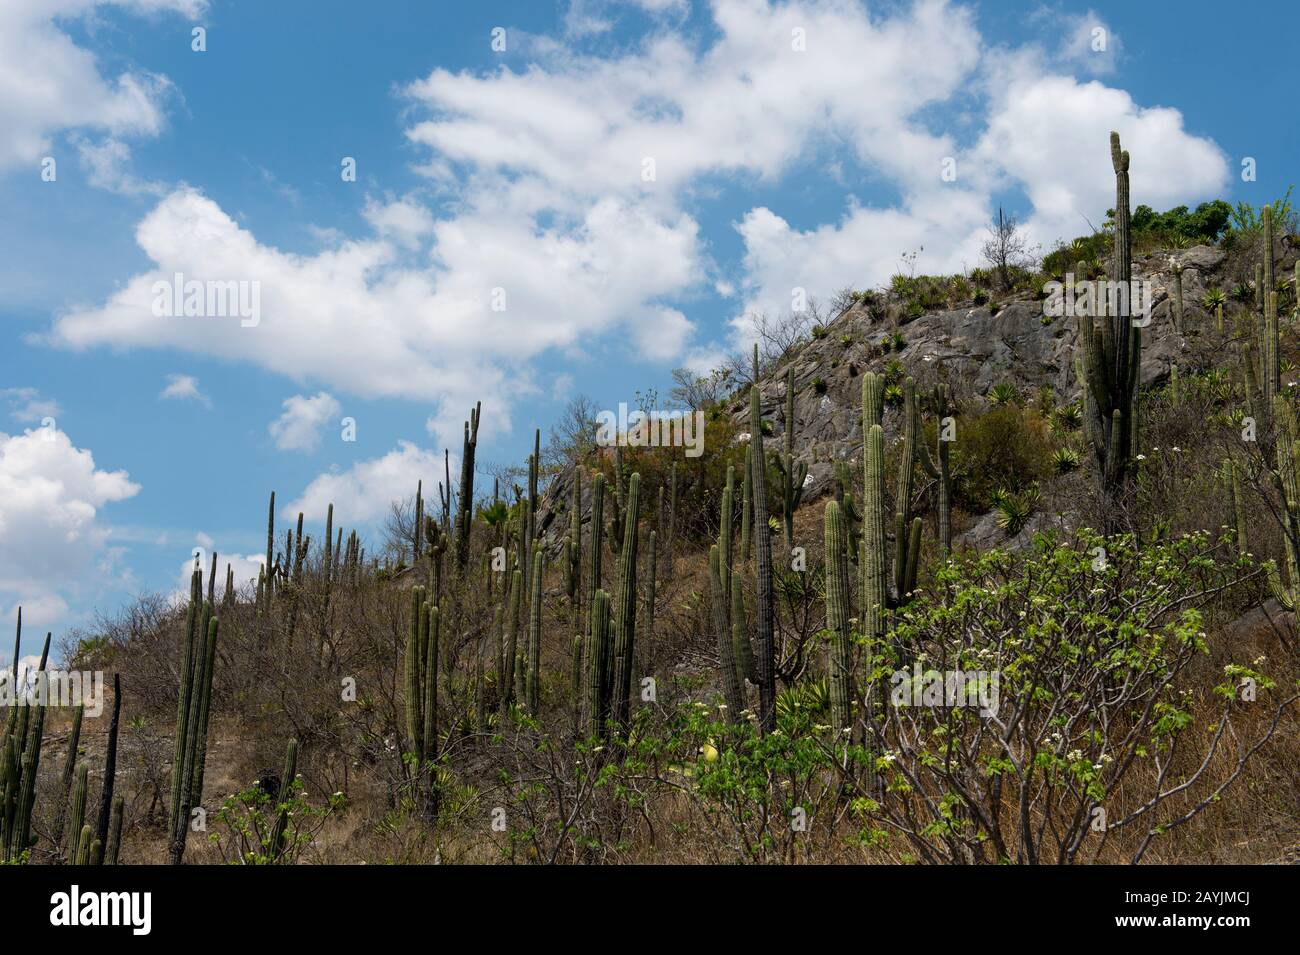 Saguaro cacti on the hillside at Hierve el Agua near Oaxaca, southern Mexico. Stock Photo